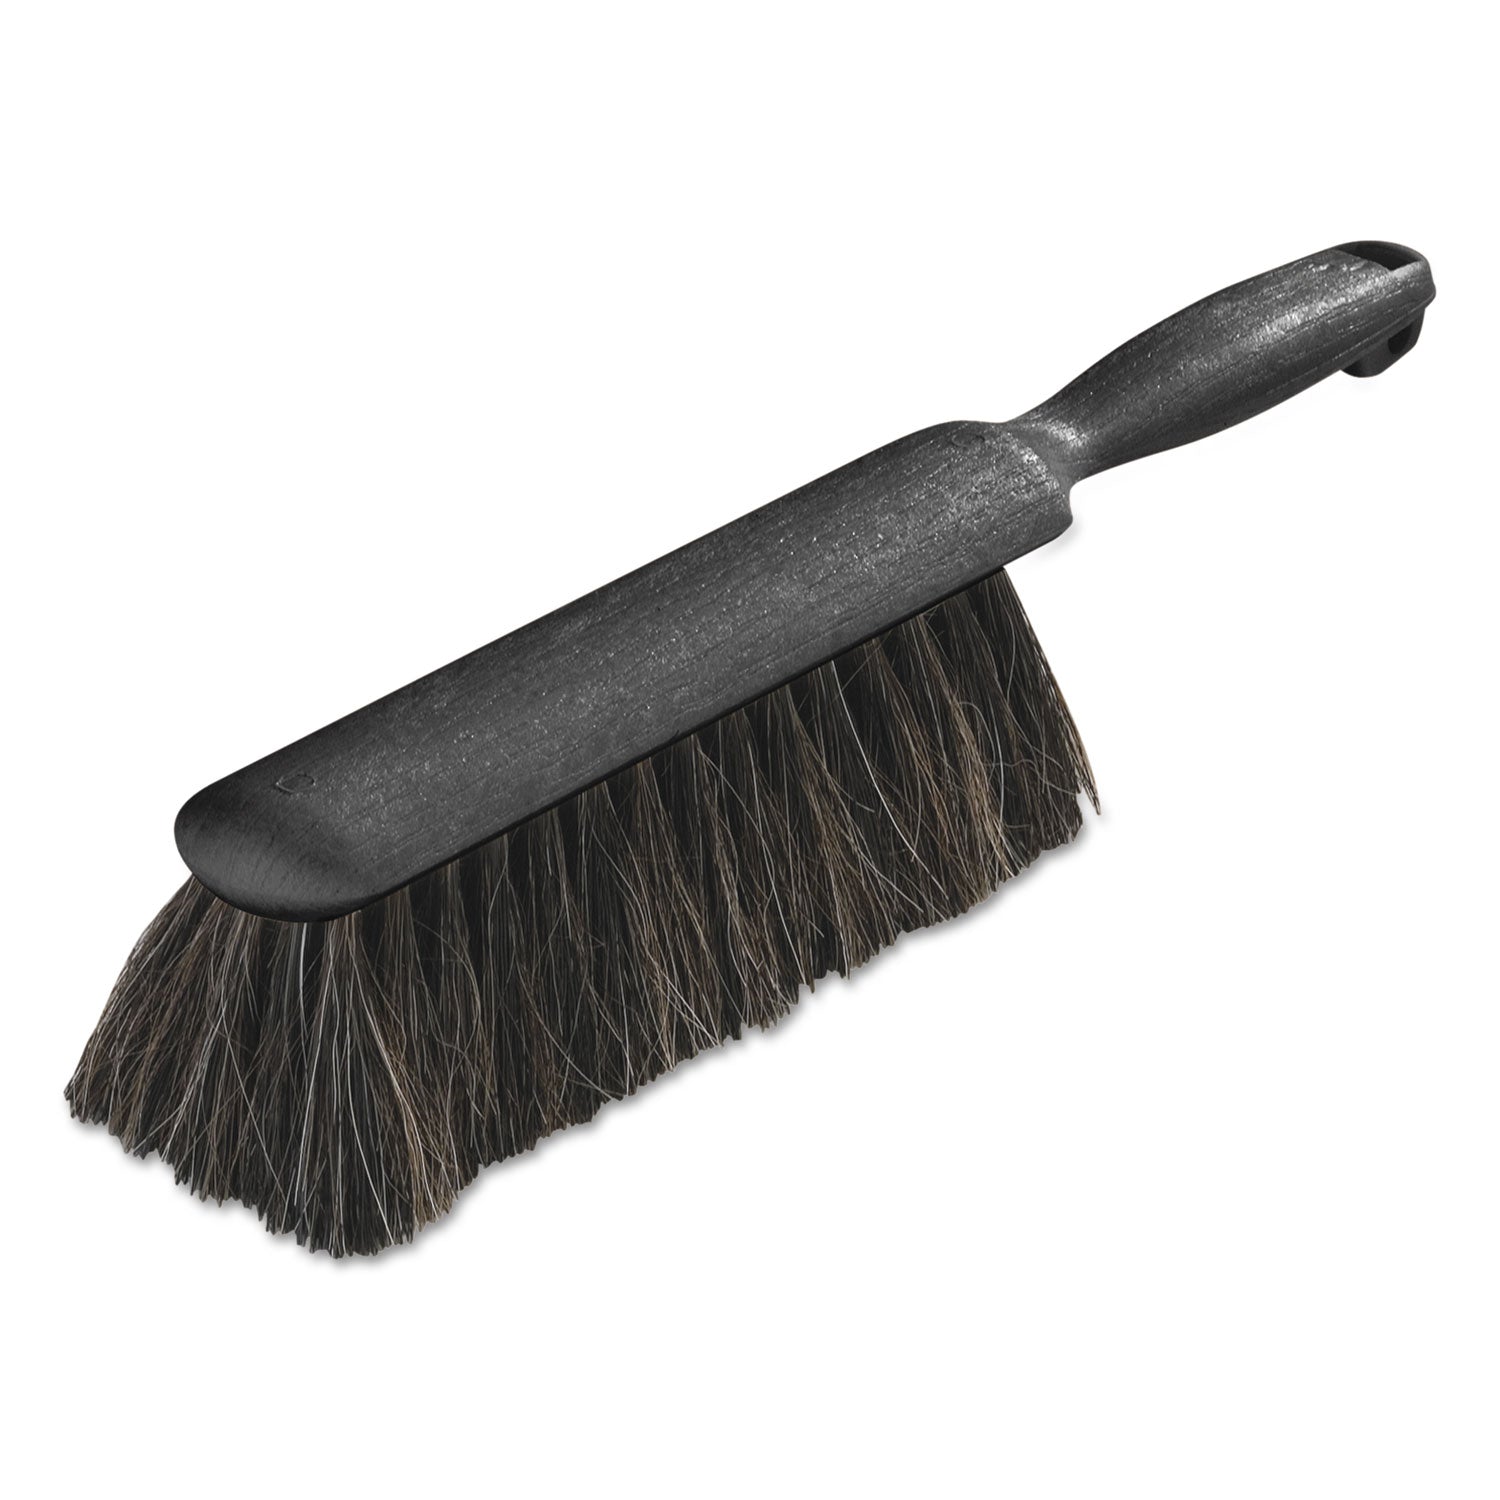 counter-radiator-brush-black-horsehair-blend-bristles-8-brush-5-black-handle_cfs3622503 - 1